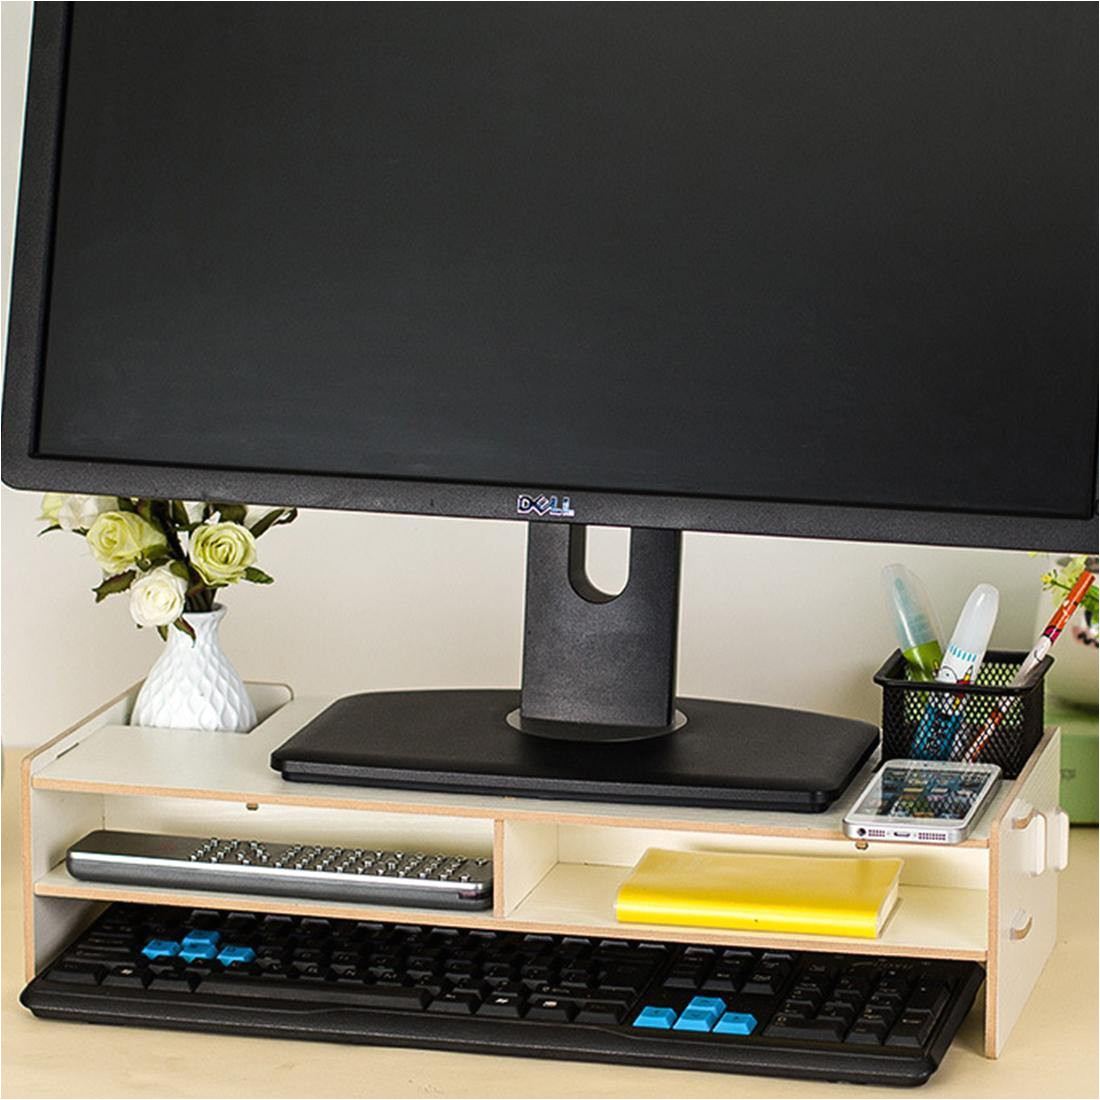 2018 diy desktop puter monitor riser stand desktop wooden monitor types of diy monitor stand wood